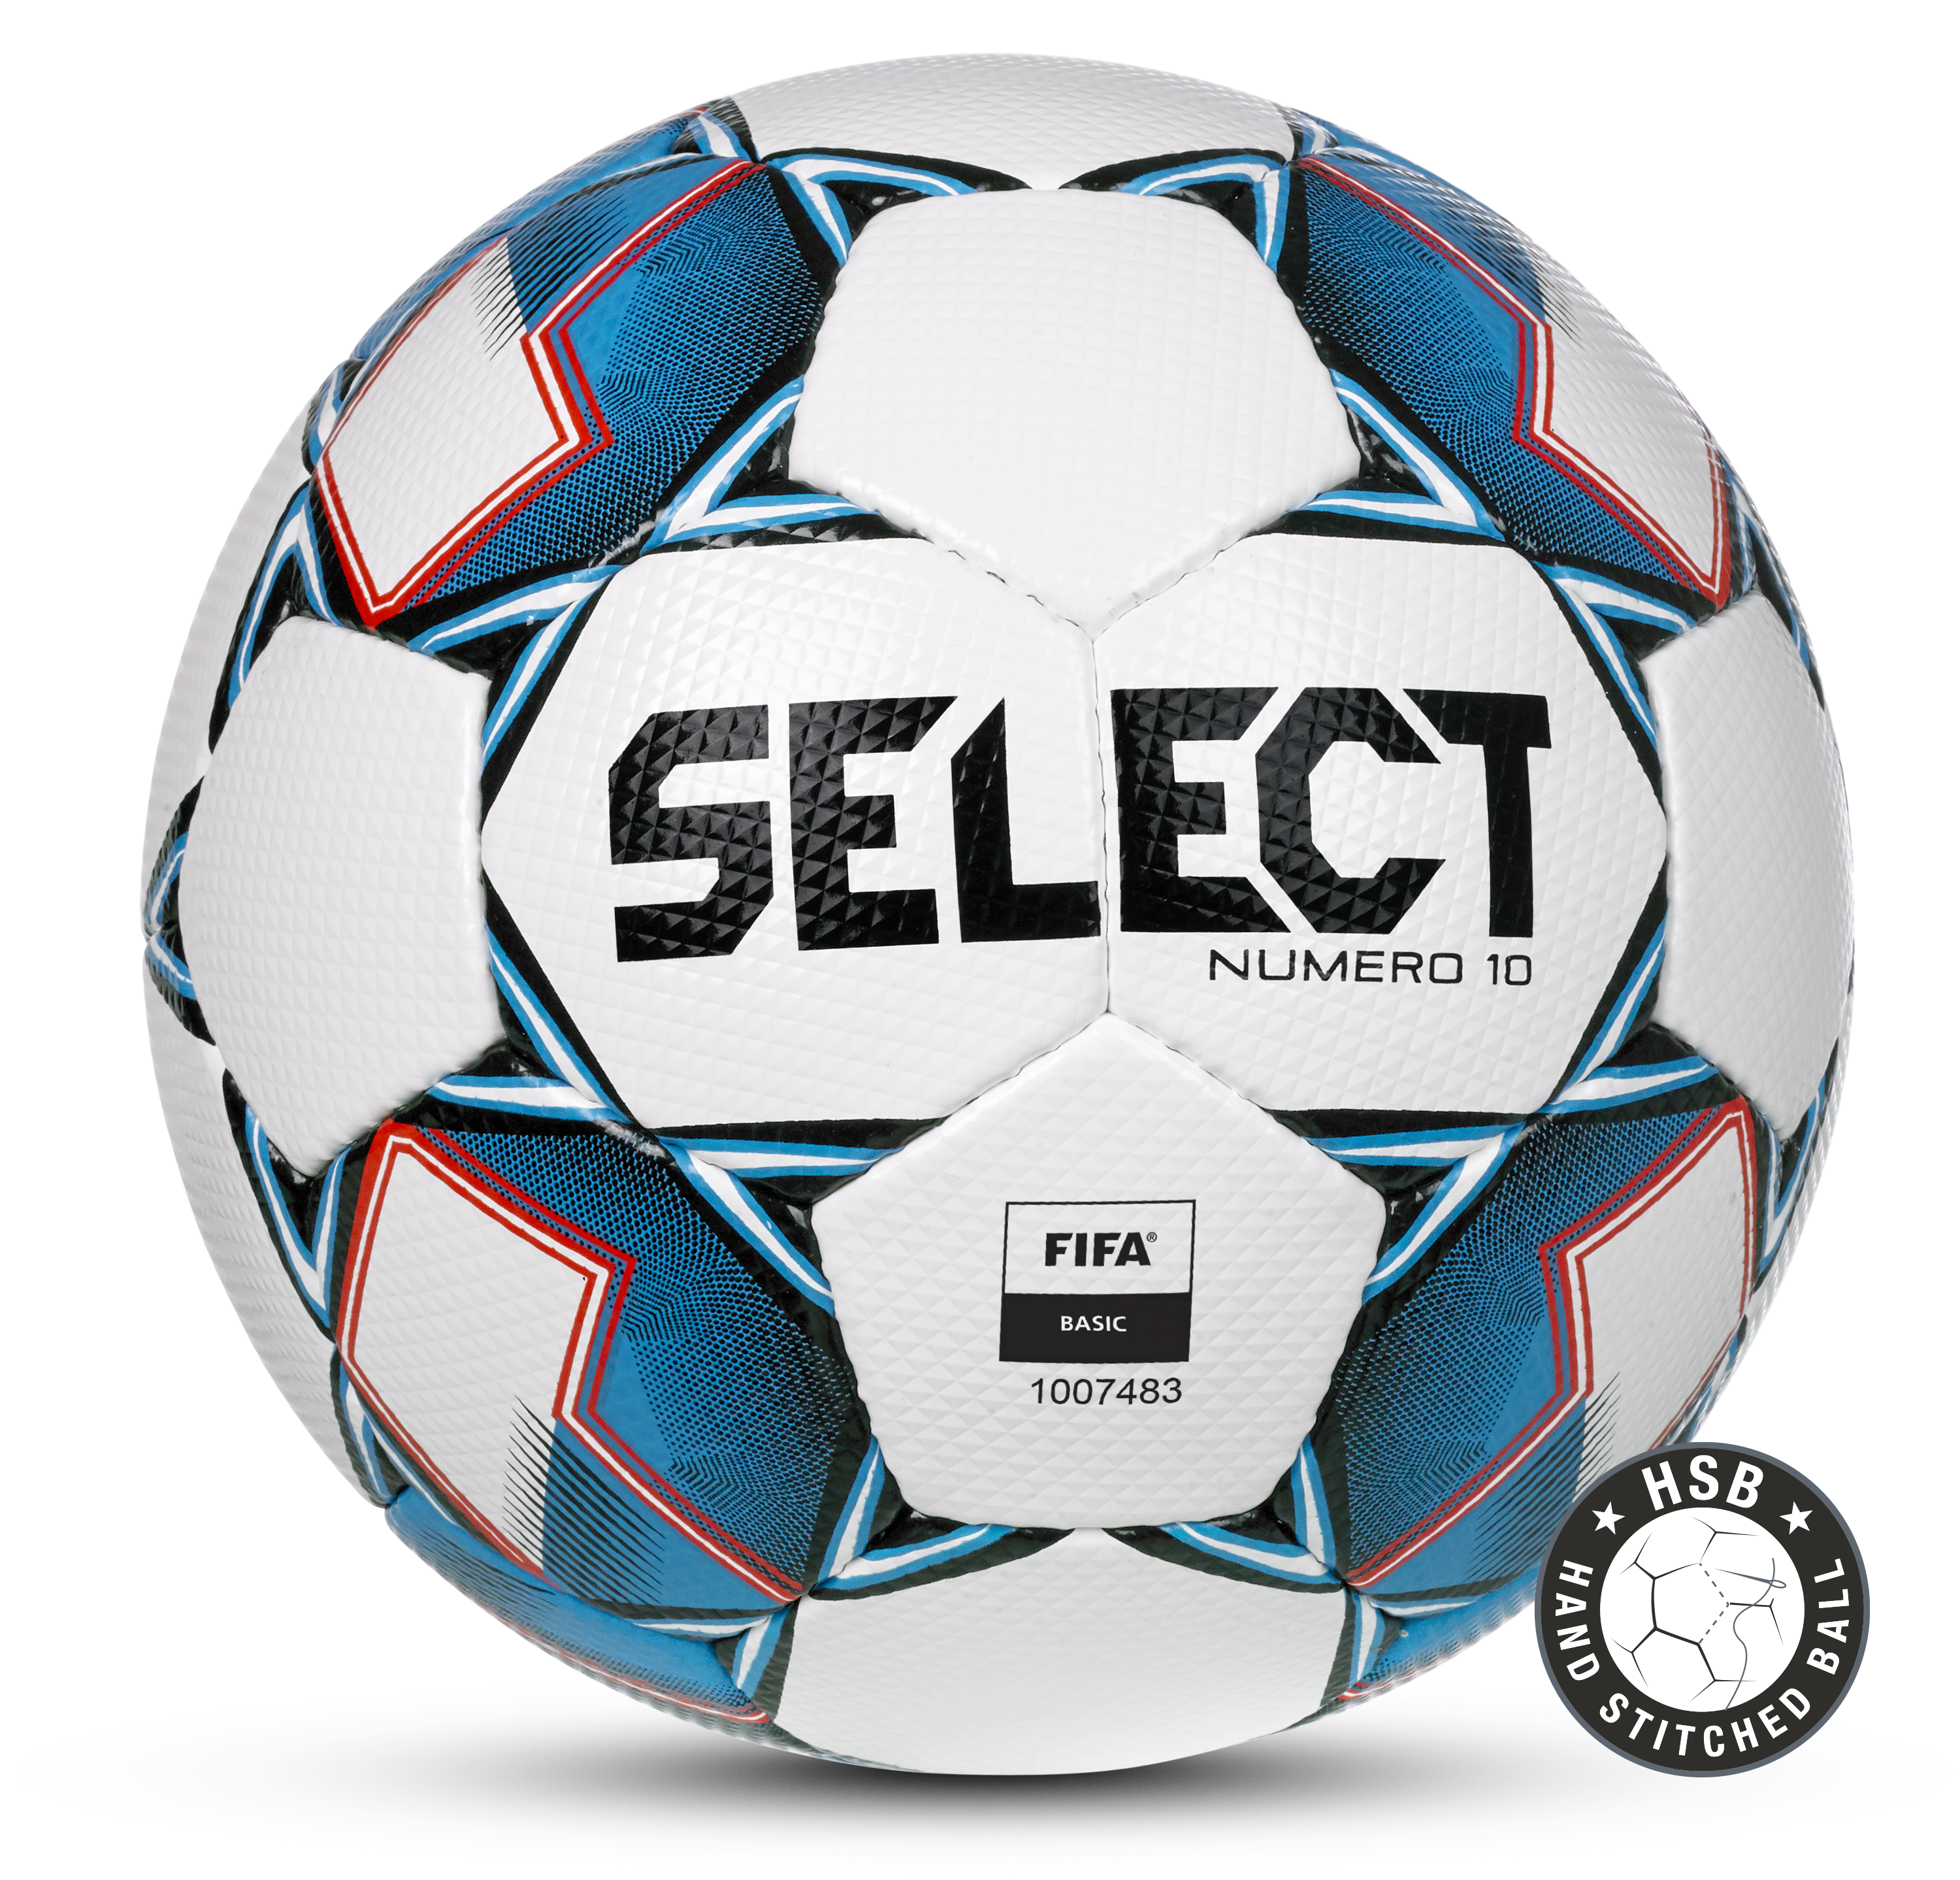 фото Select Numero 10 FIFA Basic мяч футбольный размер 5 Football-54 